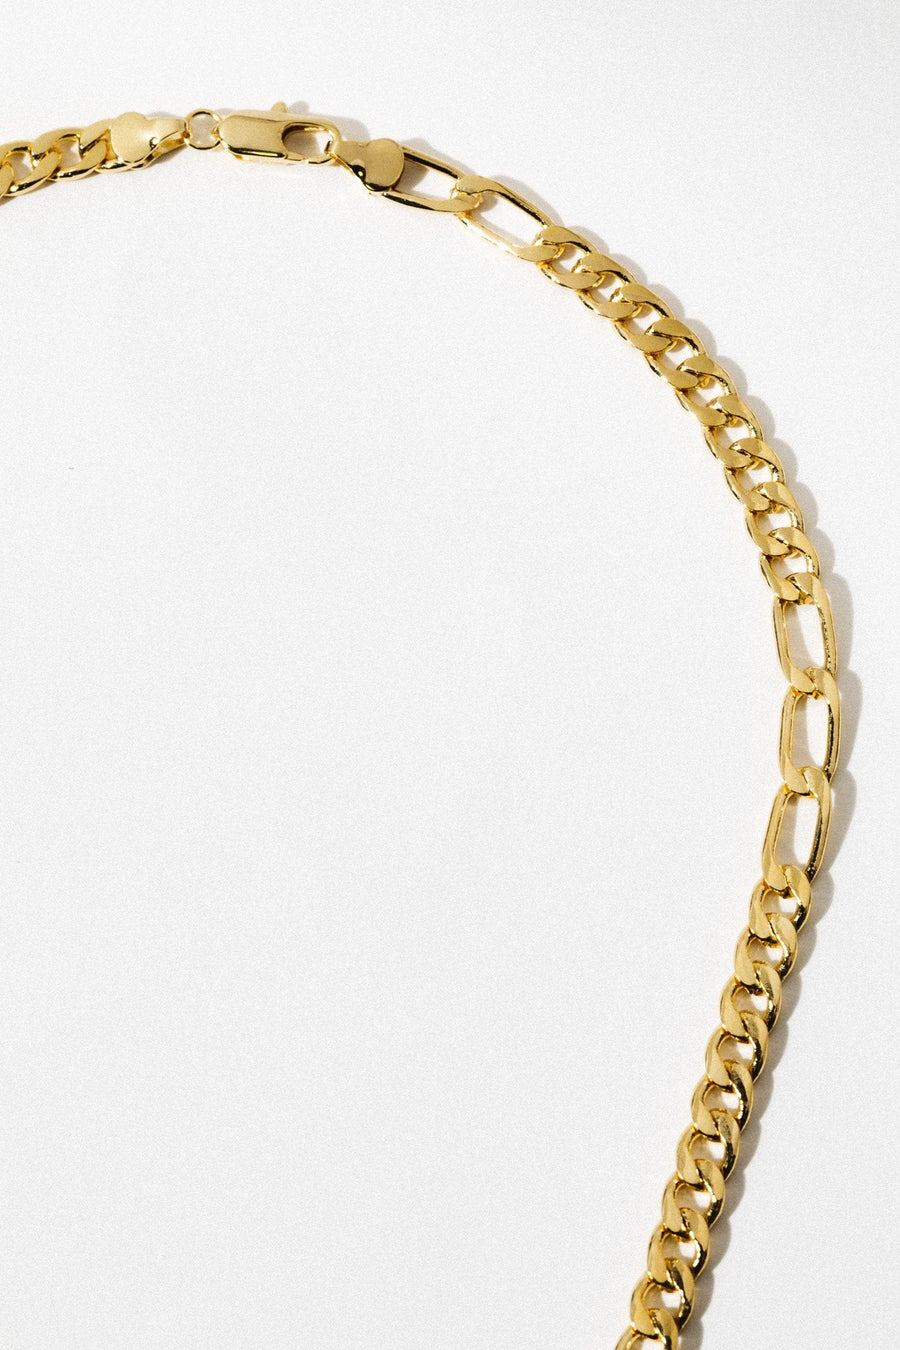 Dona Italia Jewelry Gold Portofino Unisex Necklace